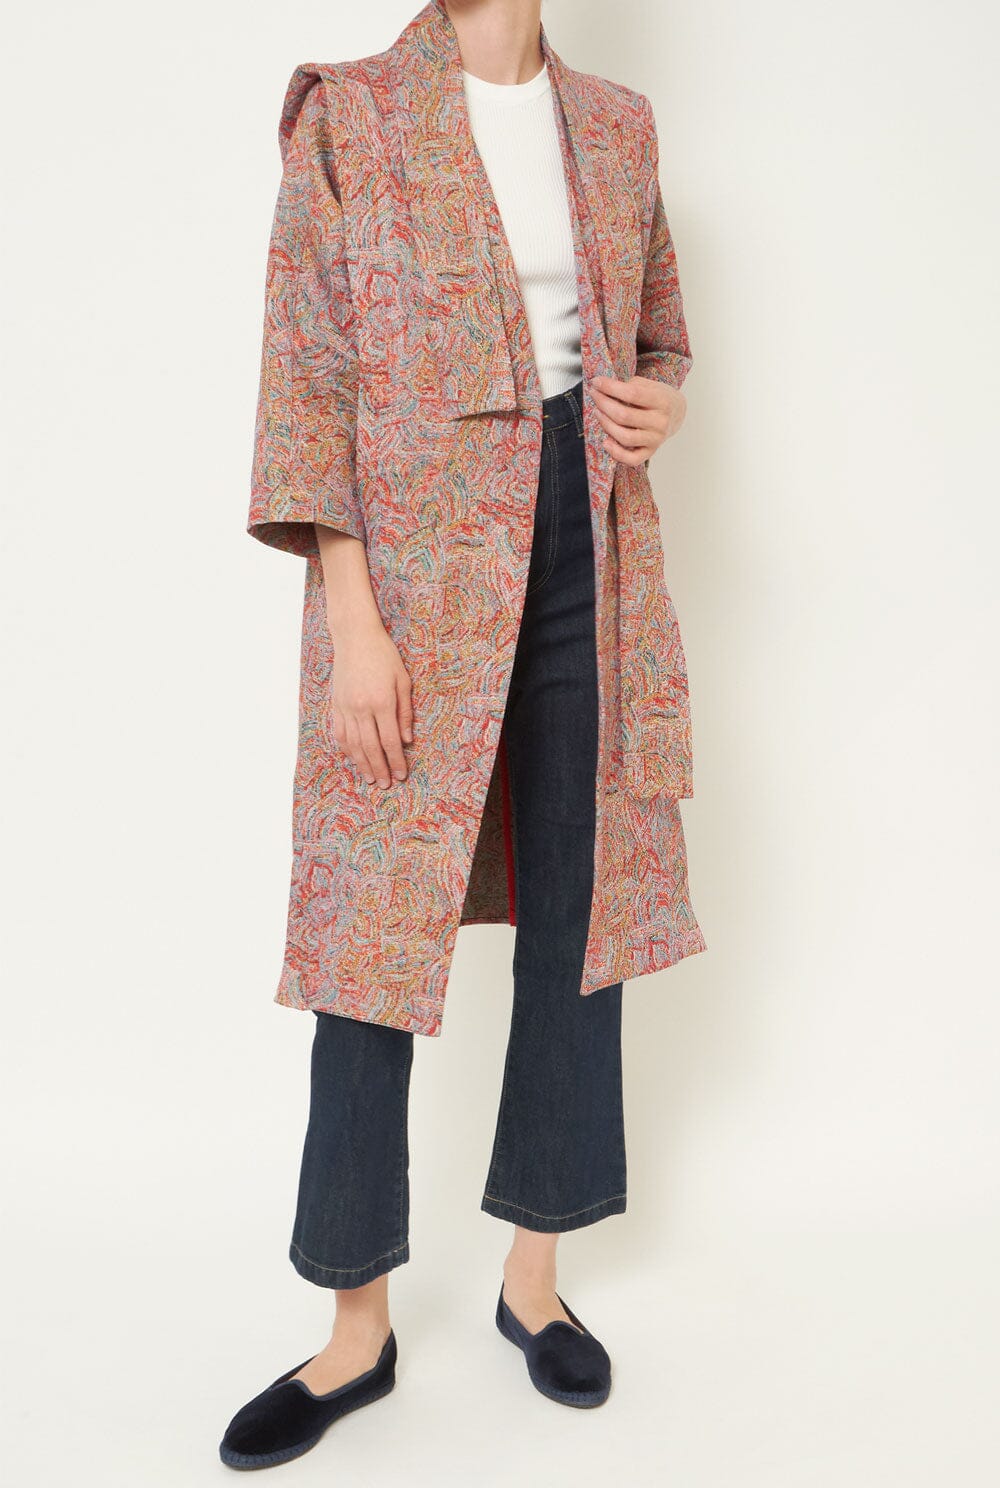 Kimono Margarita Coats Julise Magon 